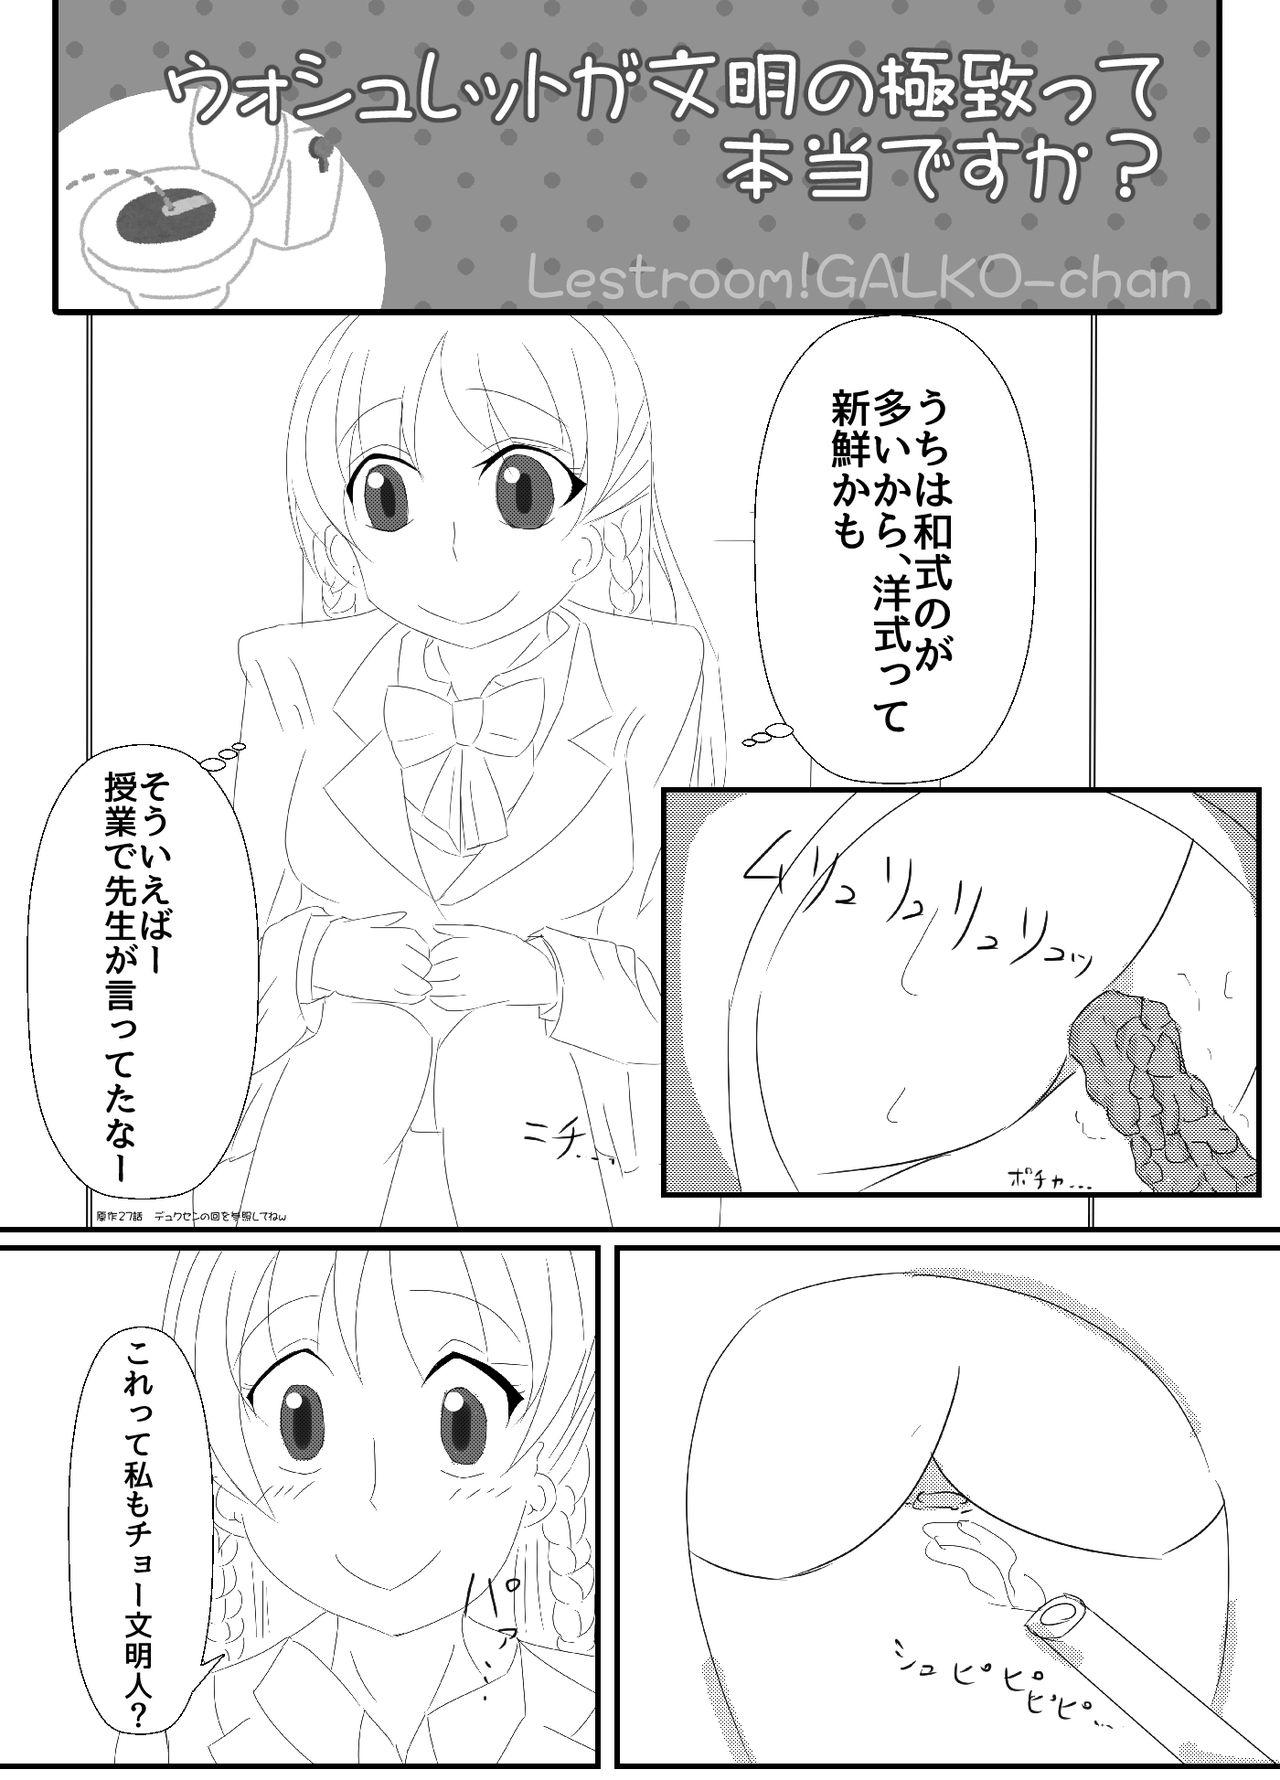 Old Otoile! Galko-chan - Oshiete galko-chan Lez - Page 8